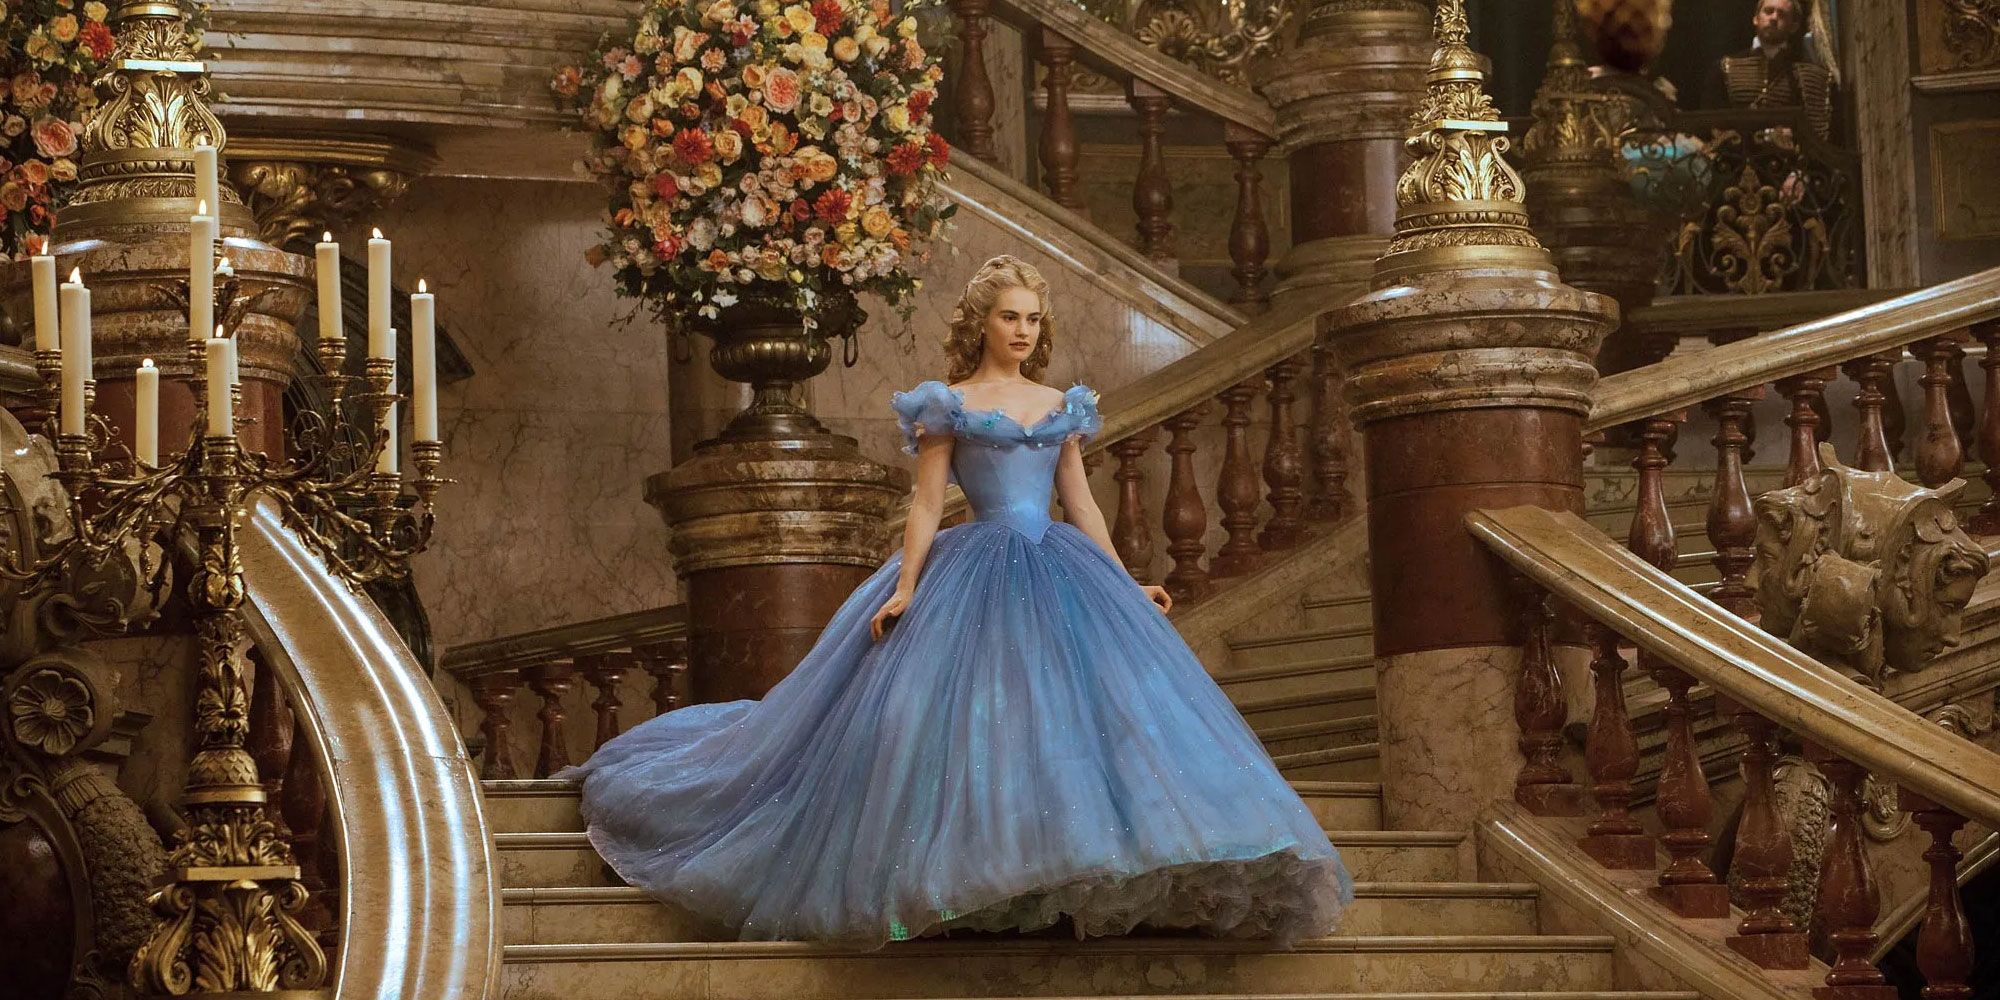 Cinderella marking her entrance at the castle's steps